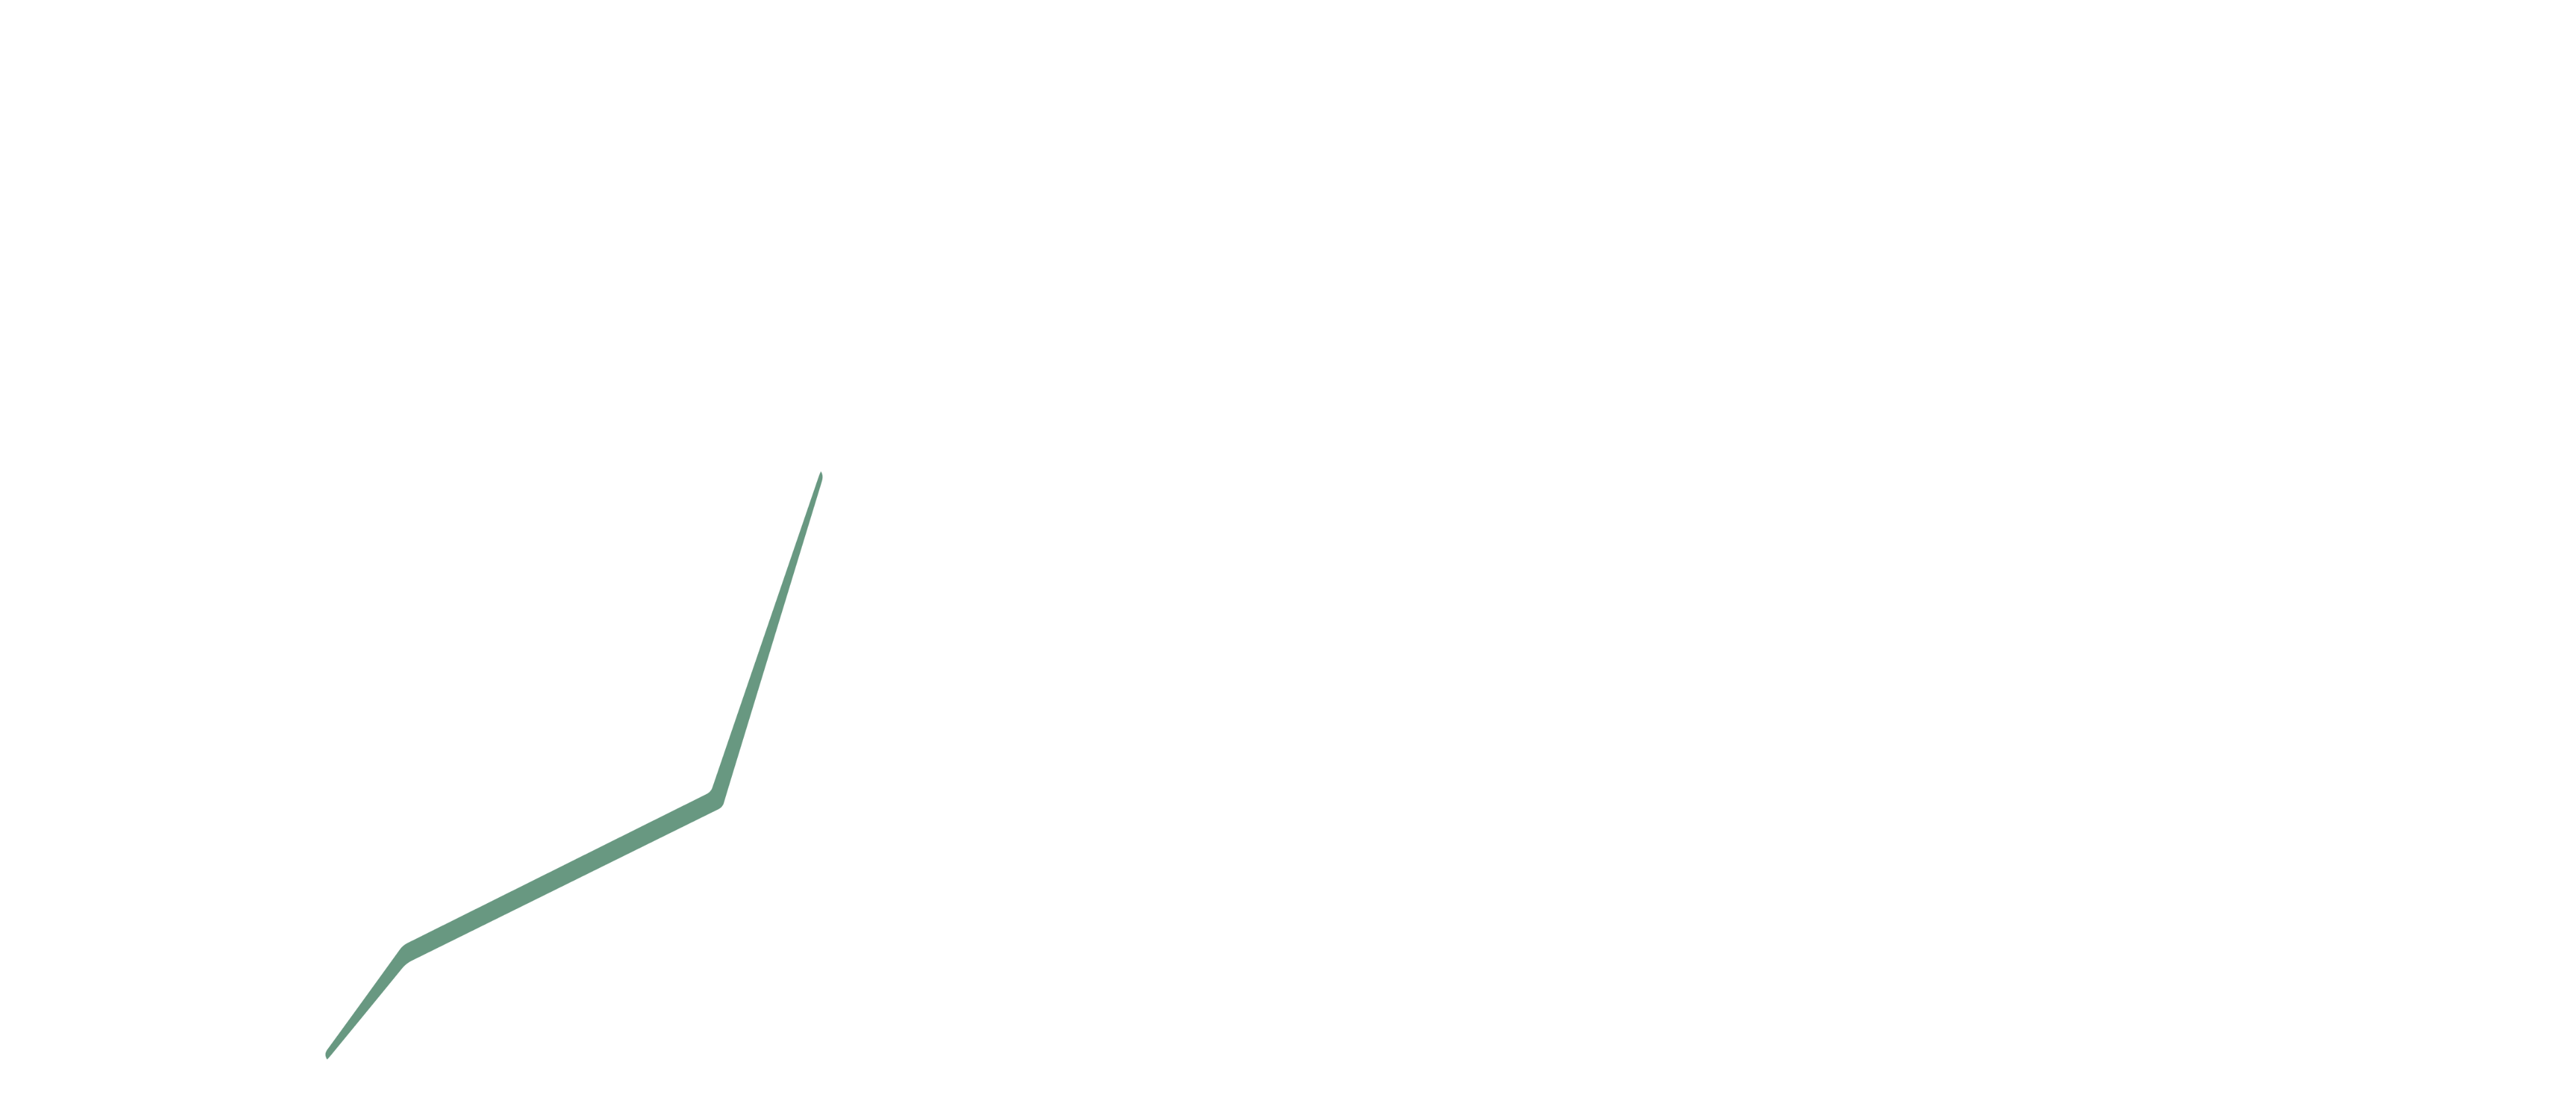 PEG Hospitality Group